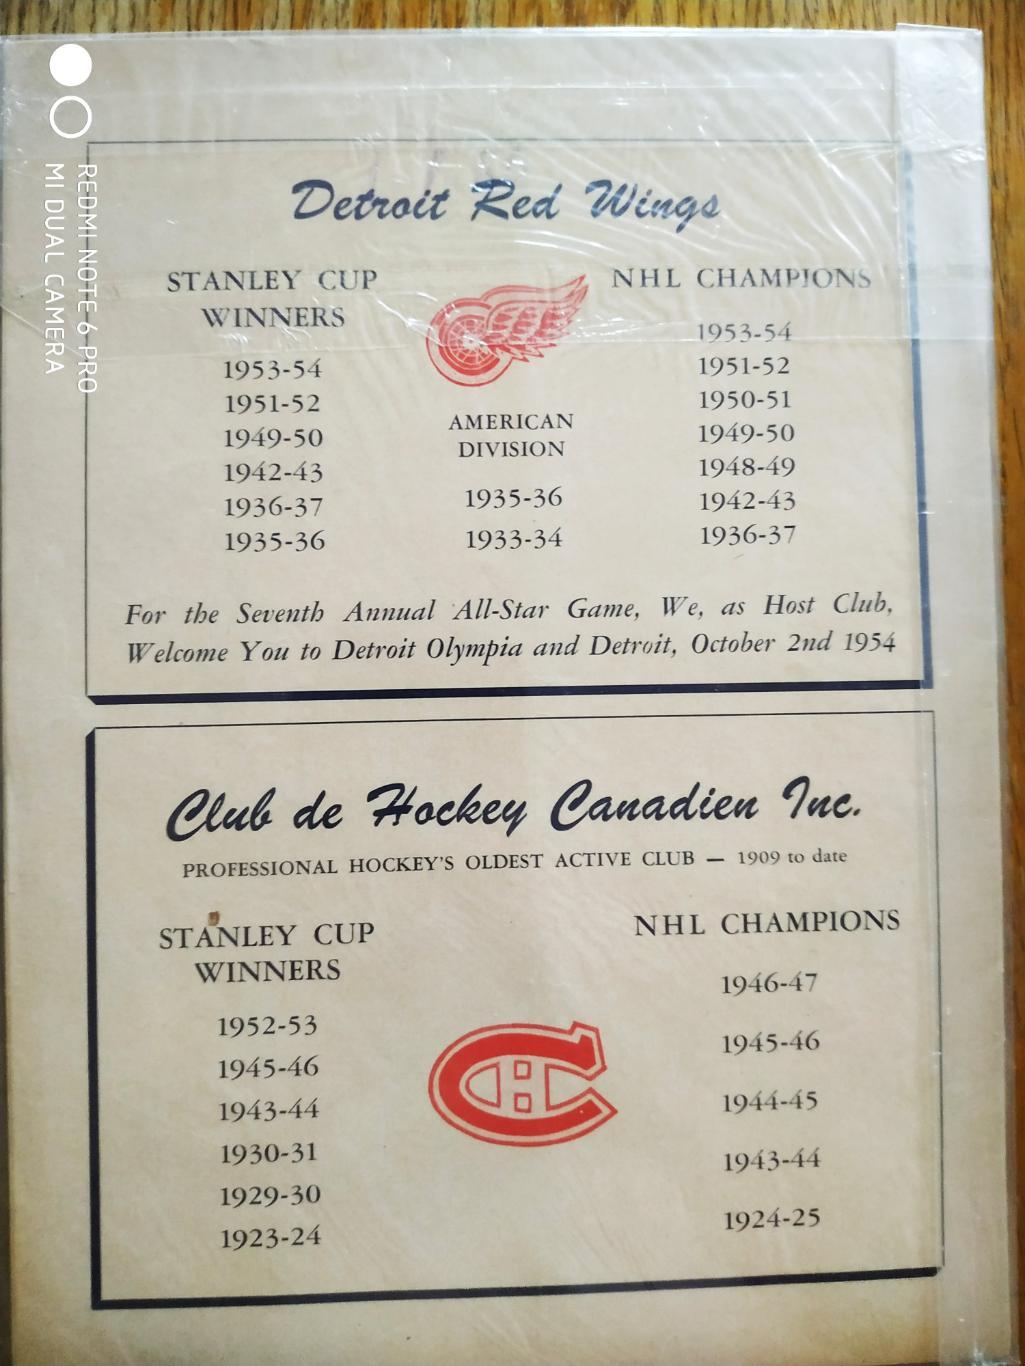 ЖУРНАЛ ЕЖЕМЕСЯЧНИК НХЛ NHL 1954 OCTOBER THE HOCKEY MONTHLY BLUELINE 1